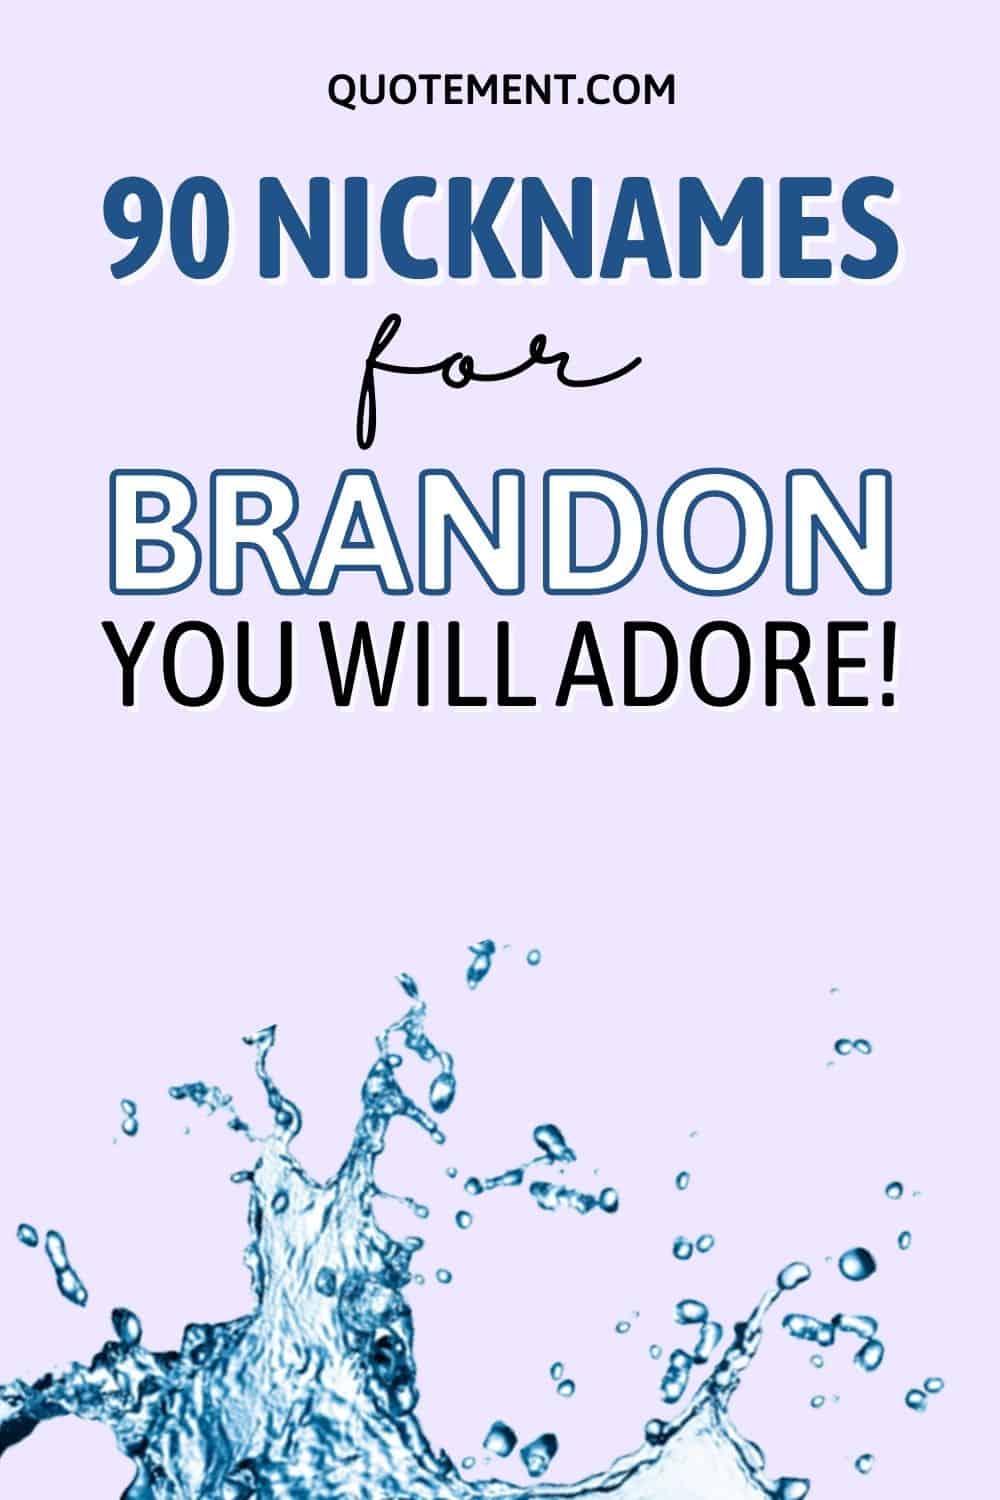 90 apodos bonitos y creativos para Brandon que te encantarán